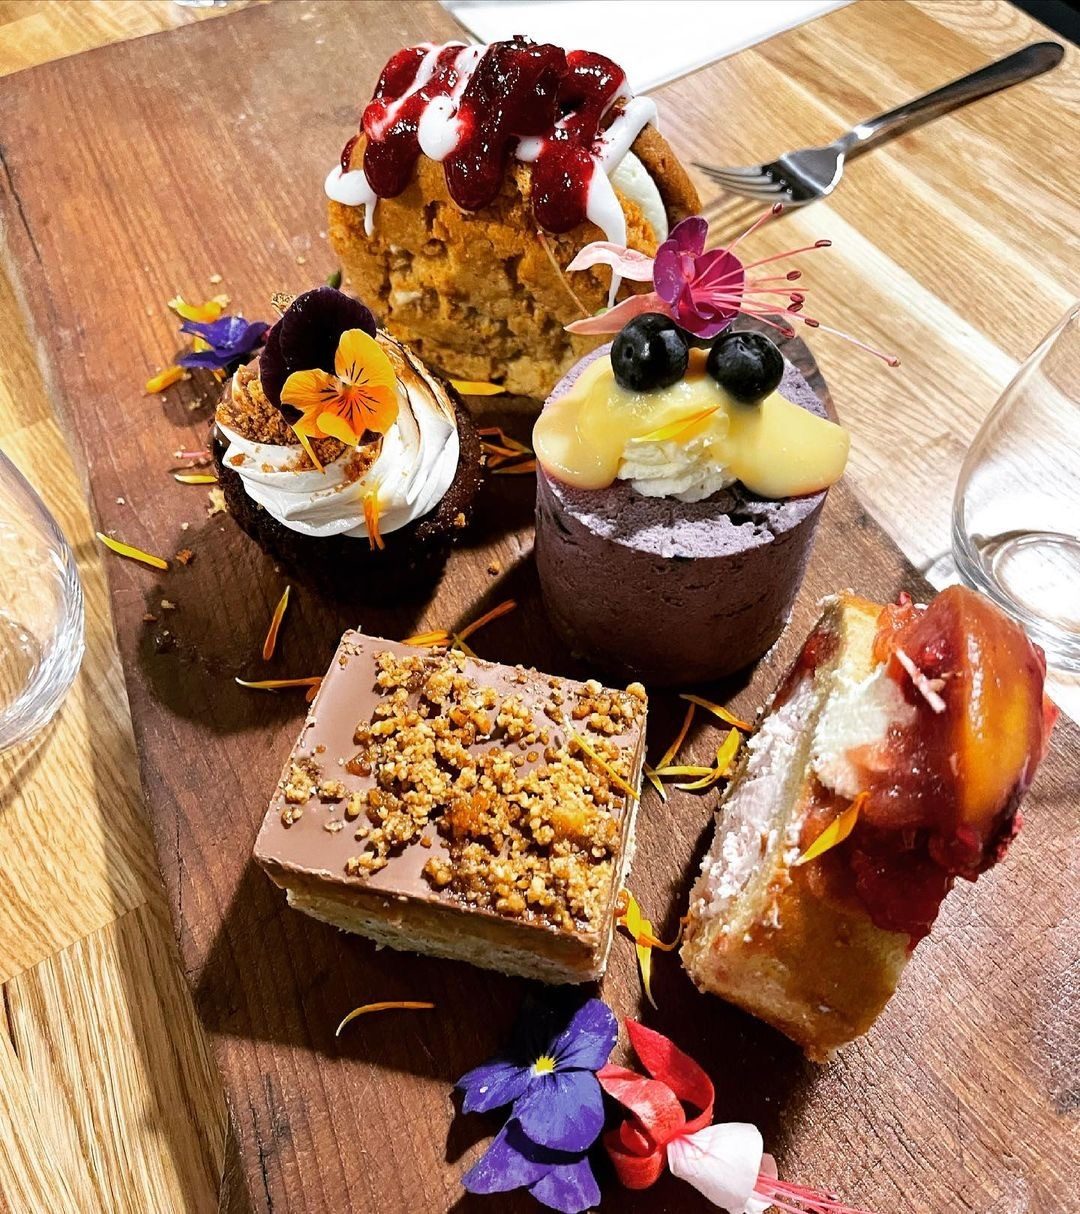 Food at Hestercombe ~ cakes and sweet treats, May 2021